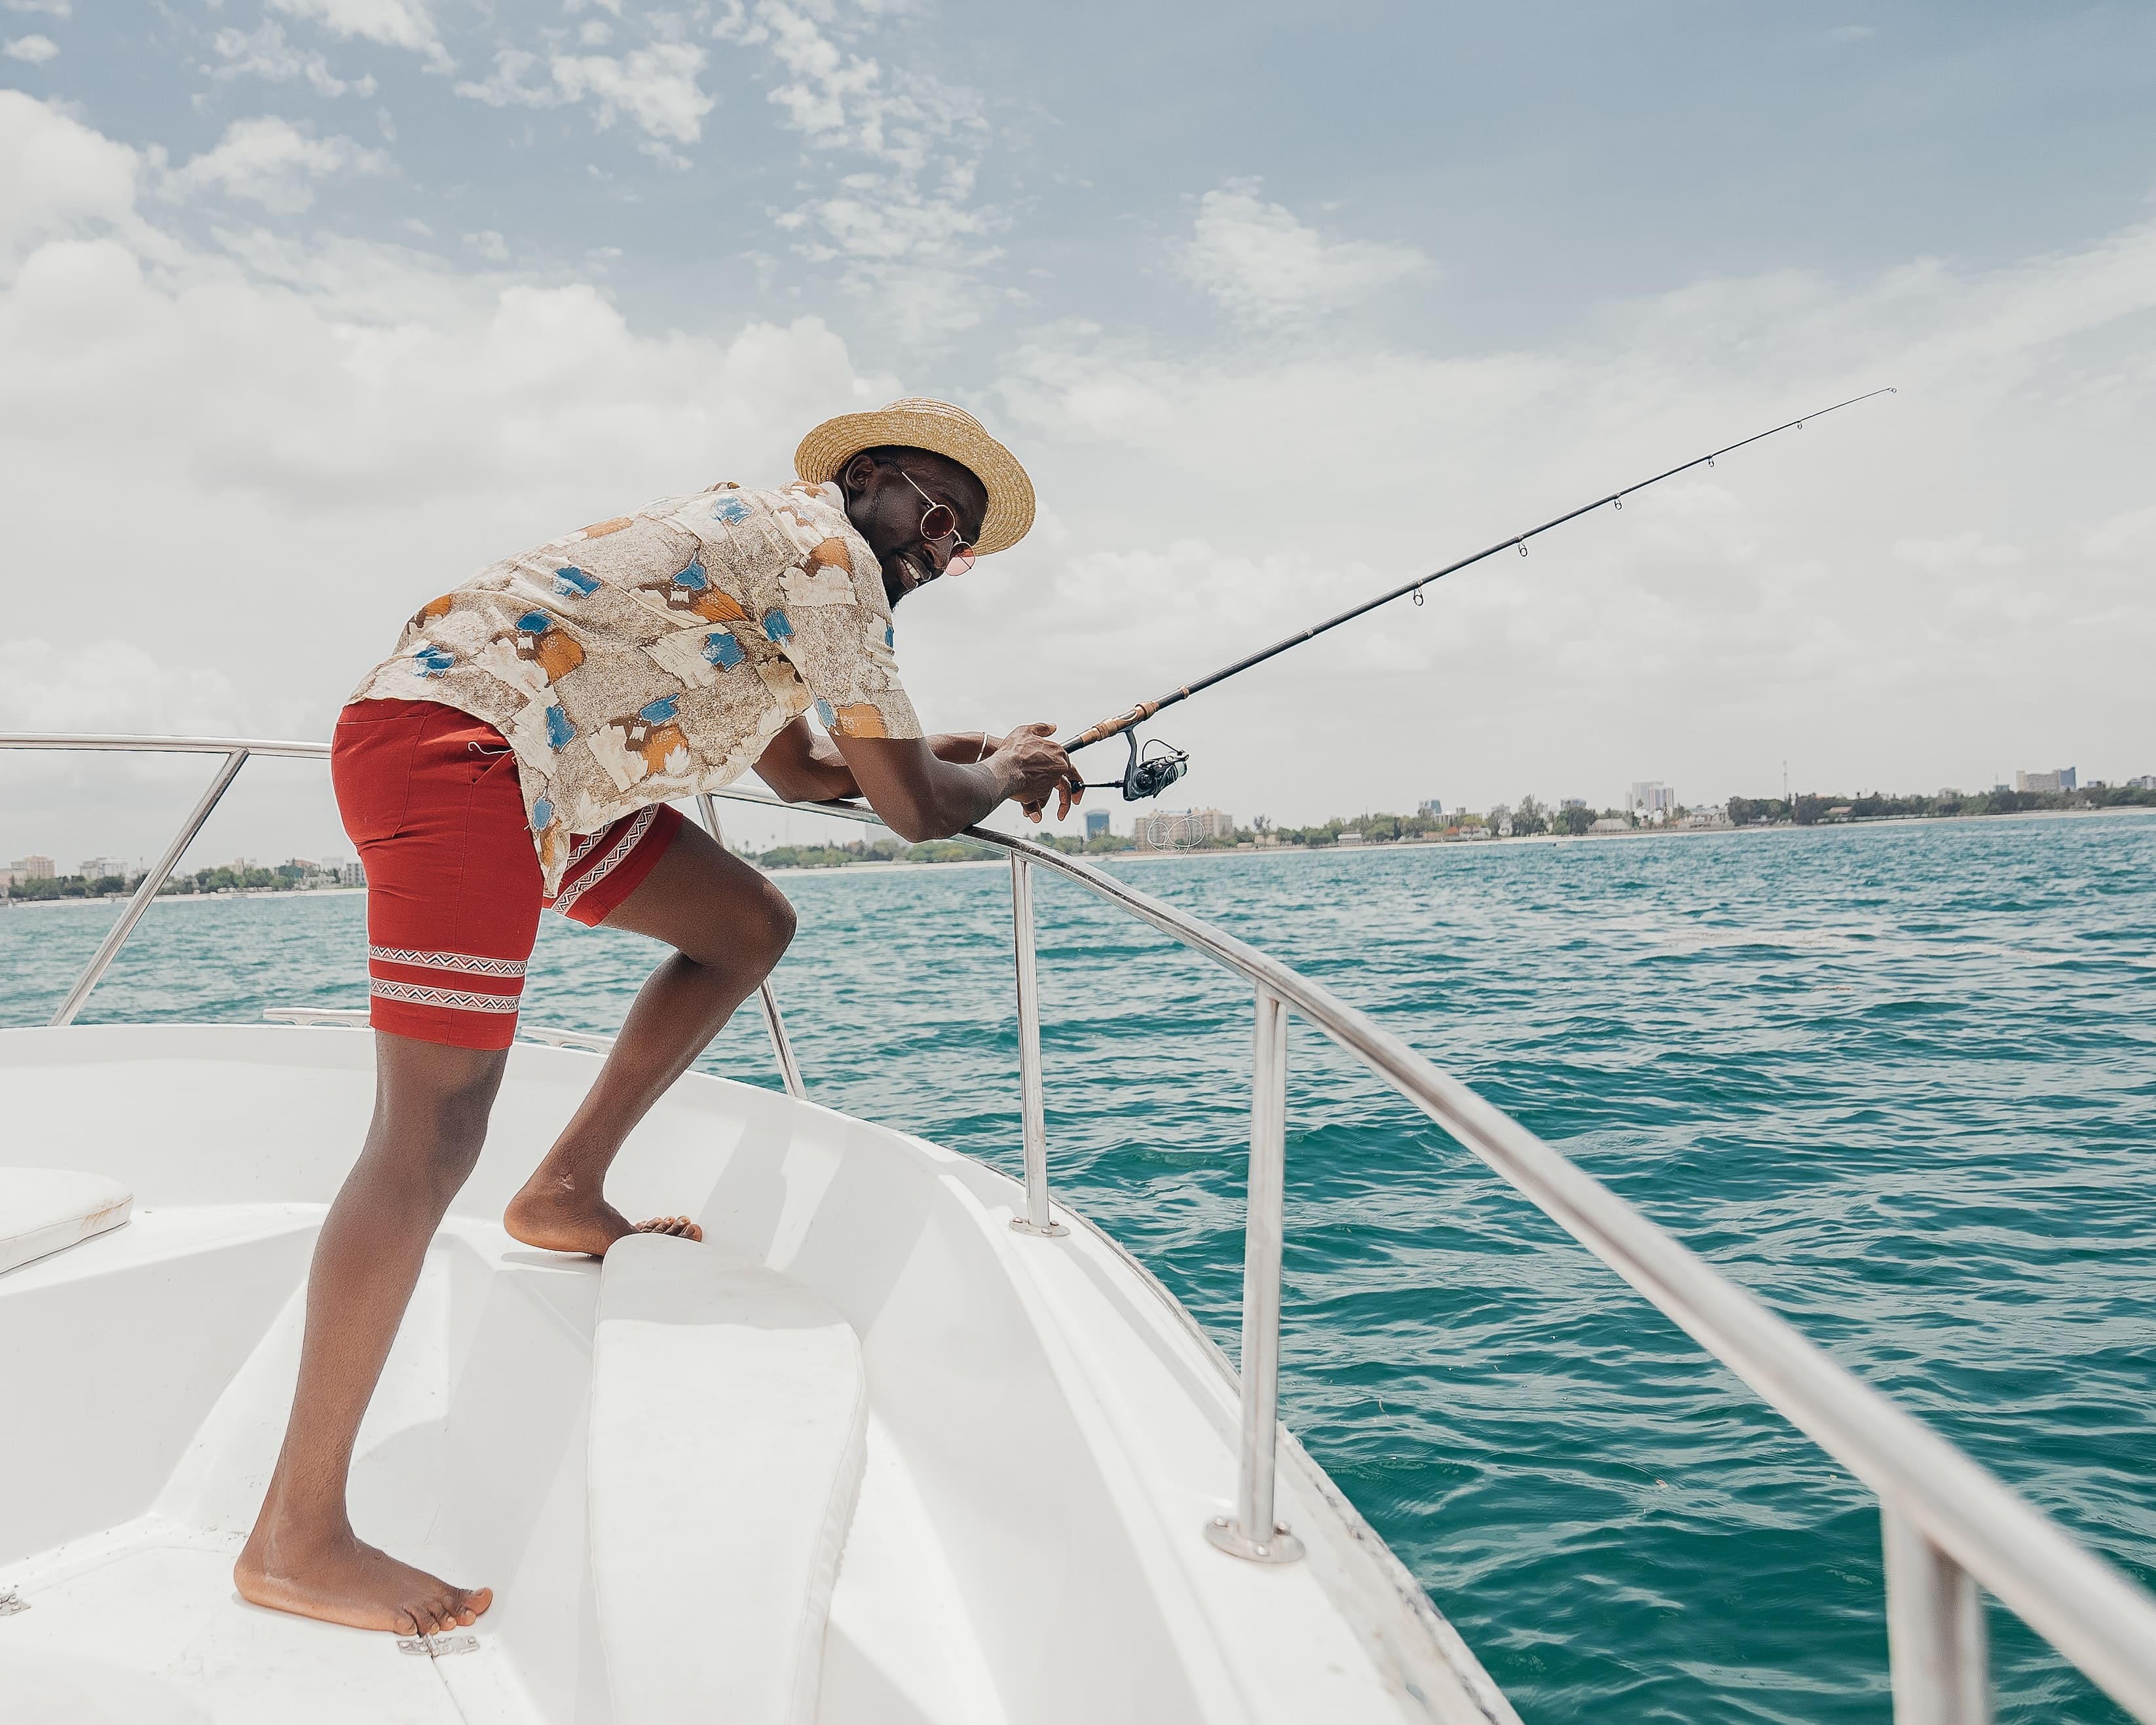 Tulum fishing charter; guy fishing on a yacht